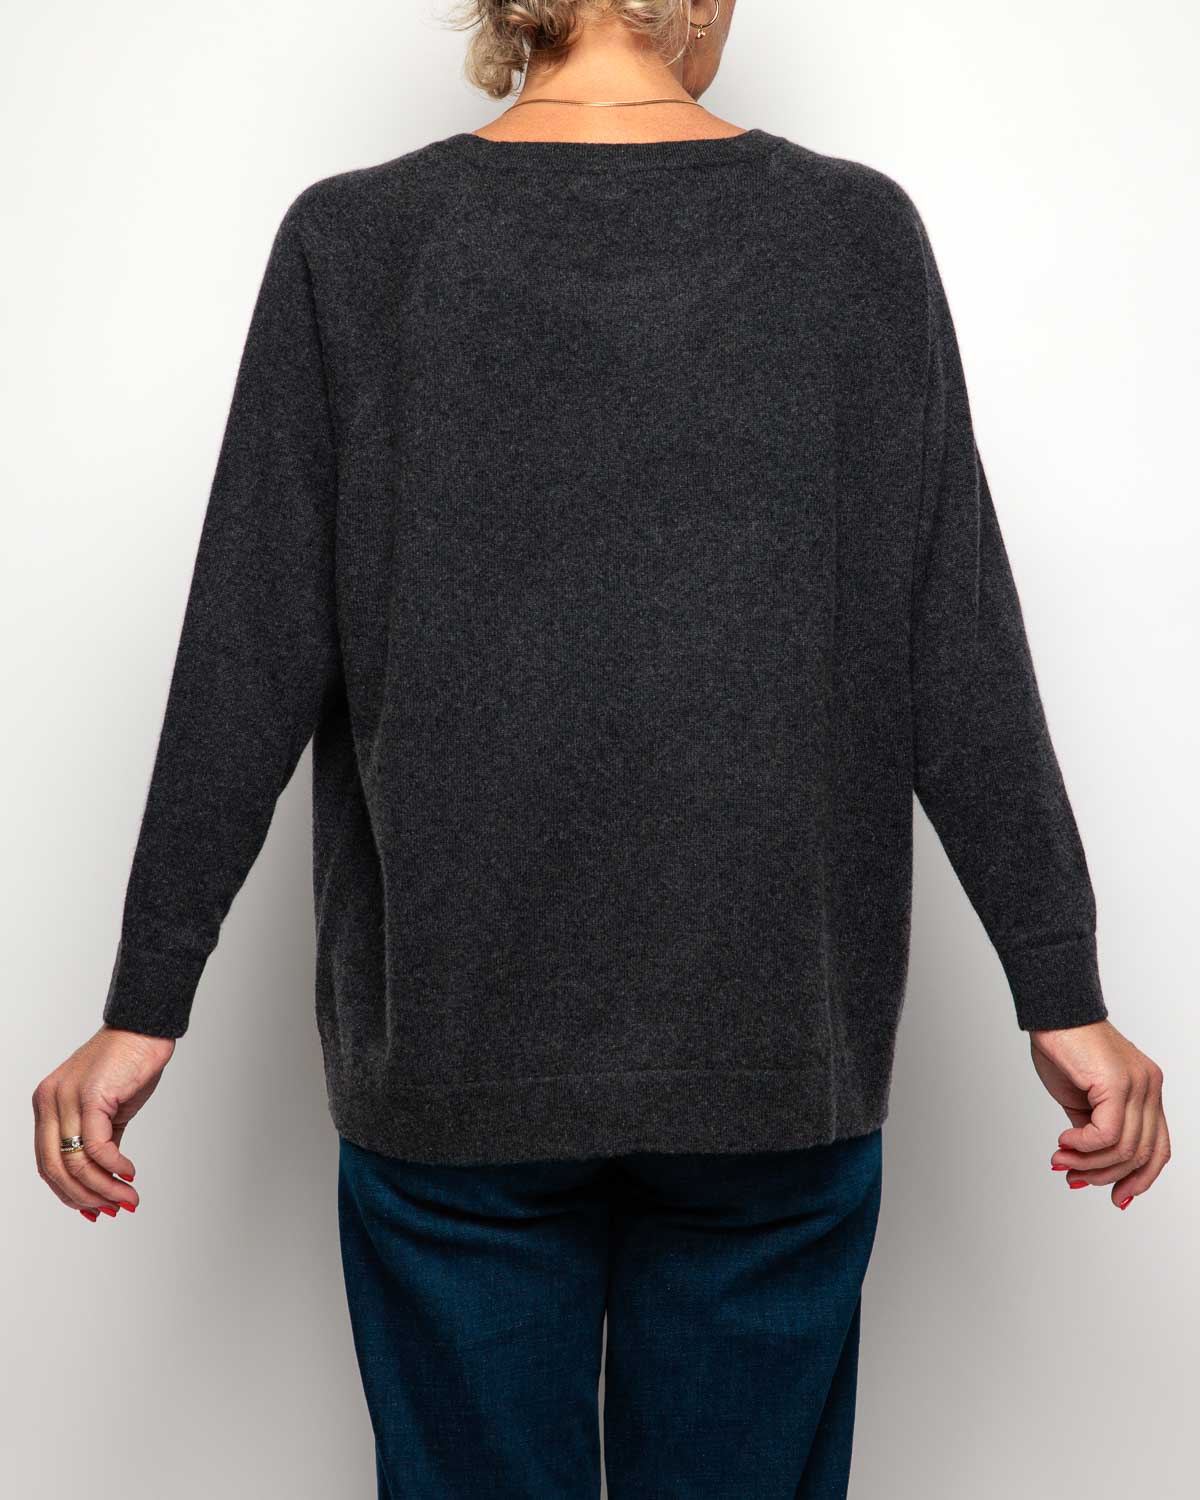 Caroline Cashmere Sweatshirt in Charcoal Marl